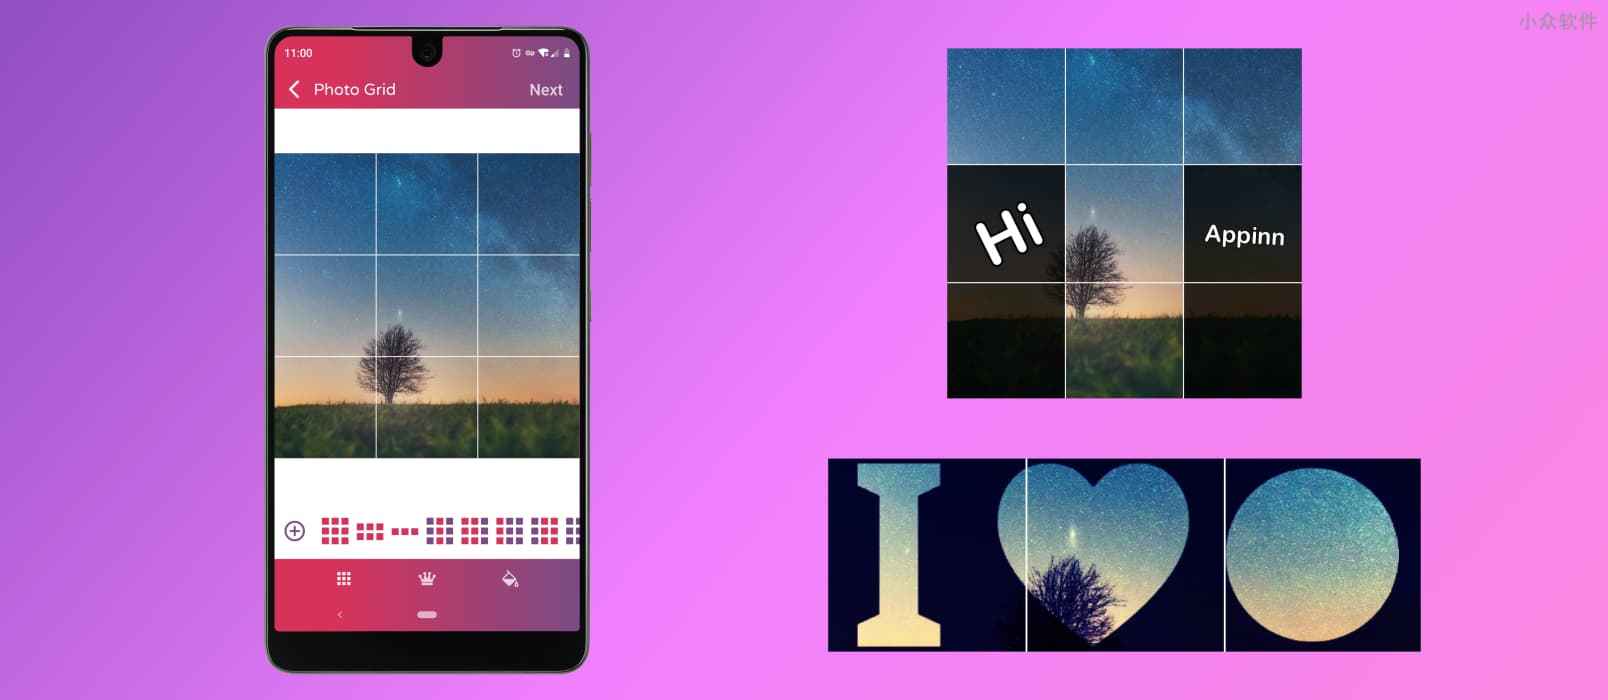 Photo Grids - 为 Instagram/朋友圈 无缝剪裁 9 宫格全景照片[Android] 1